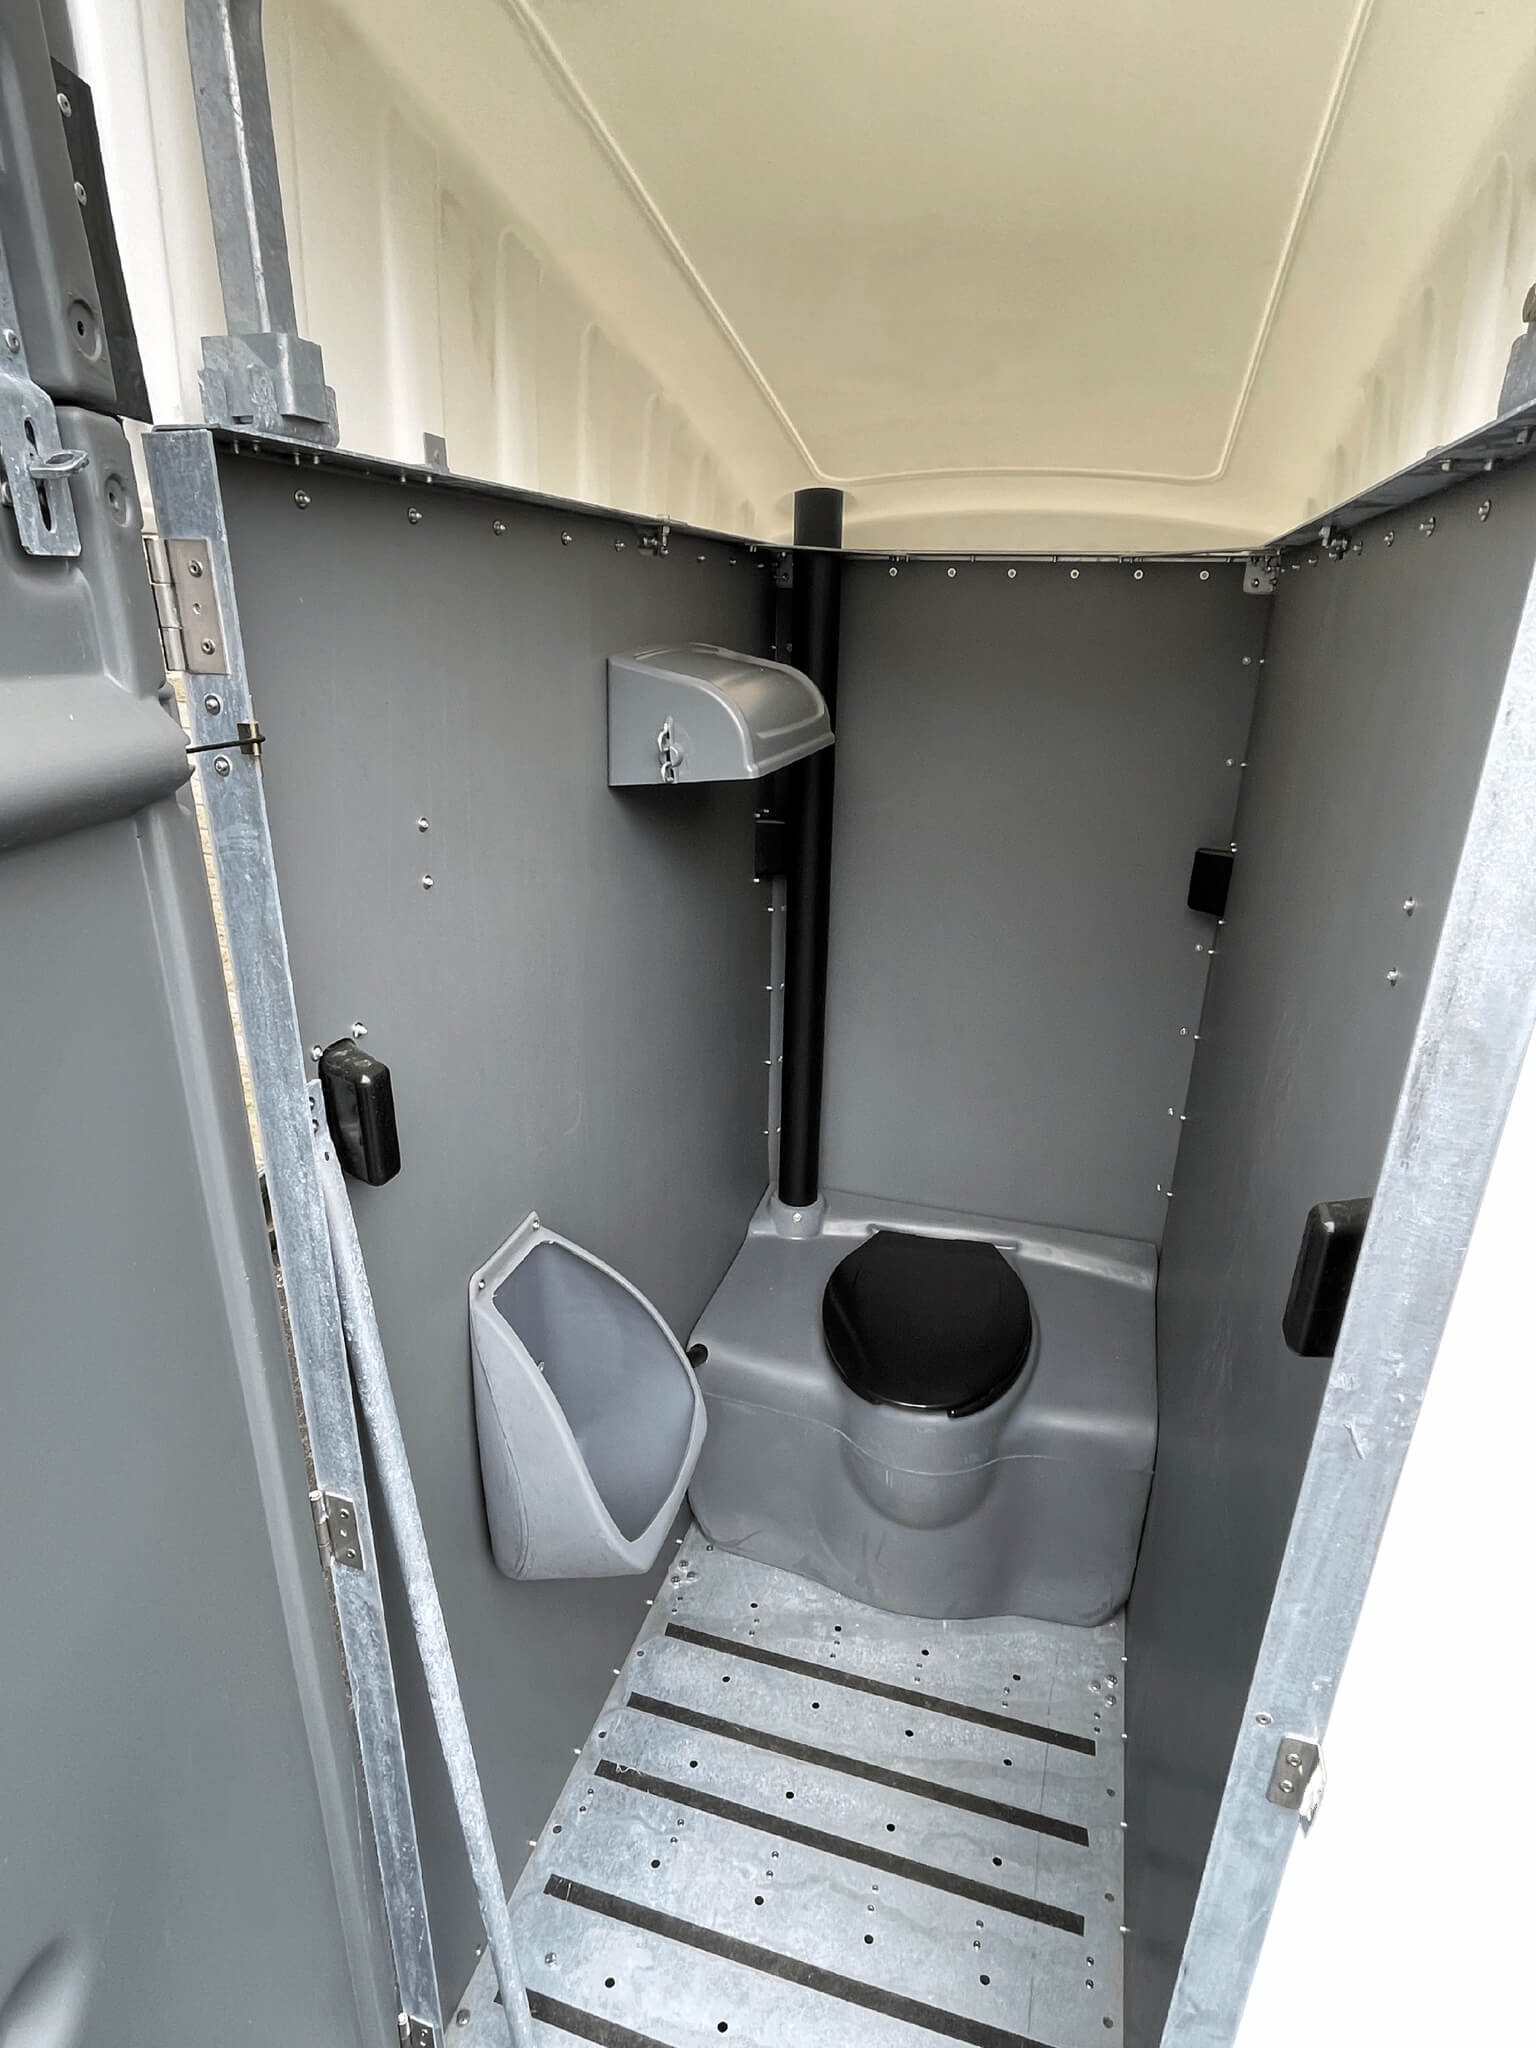 VIP Luxury Toilet Hire - The Throne Depot